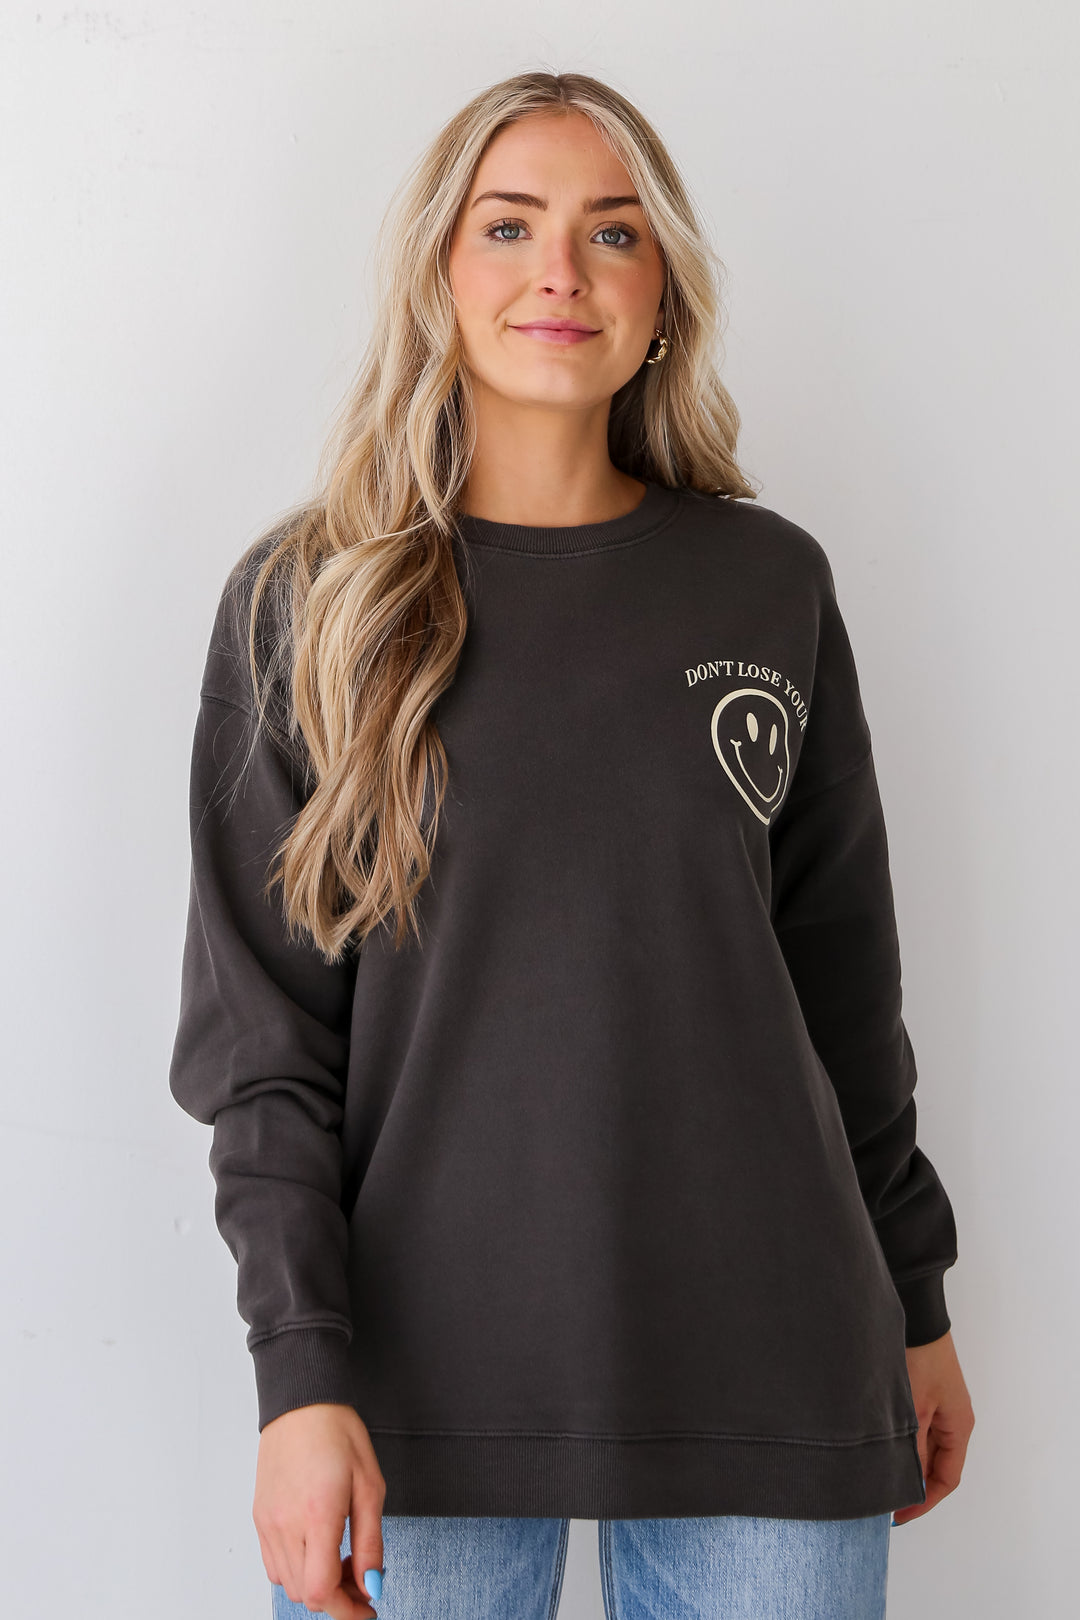 cute graphic sweatshirt for women